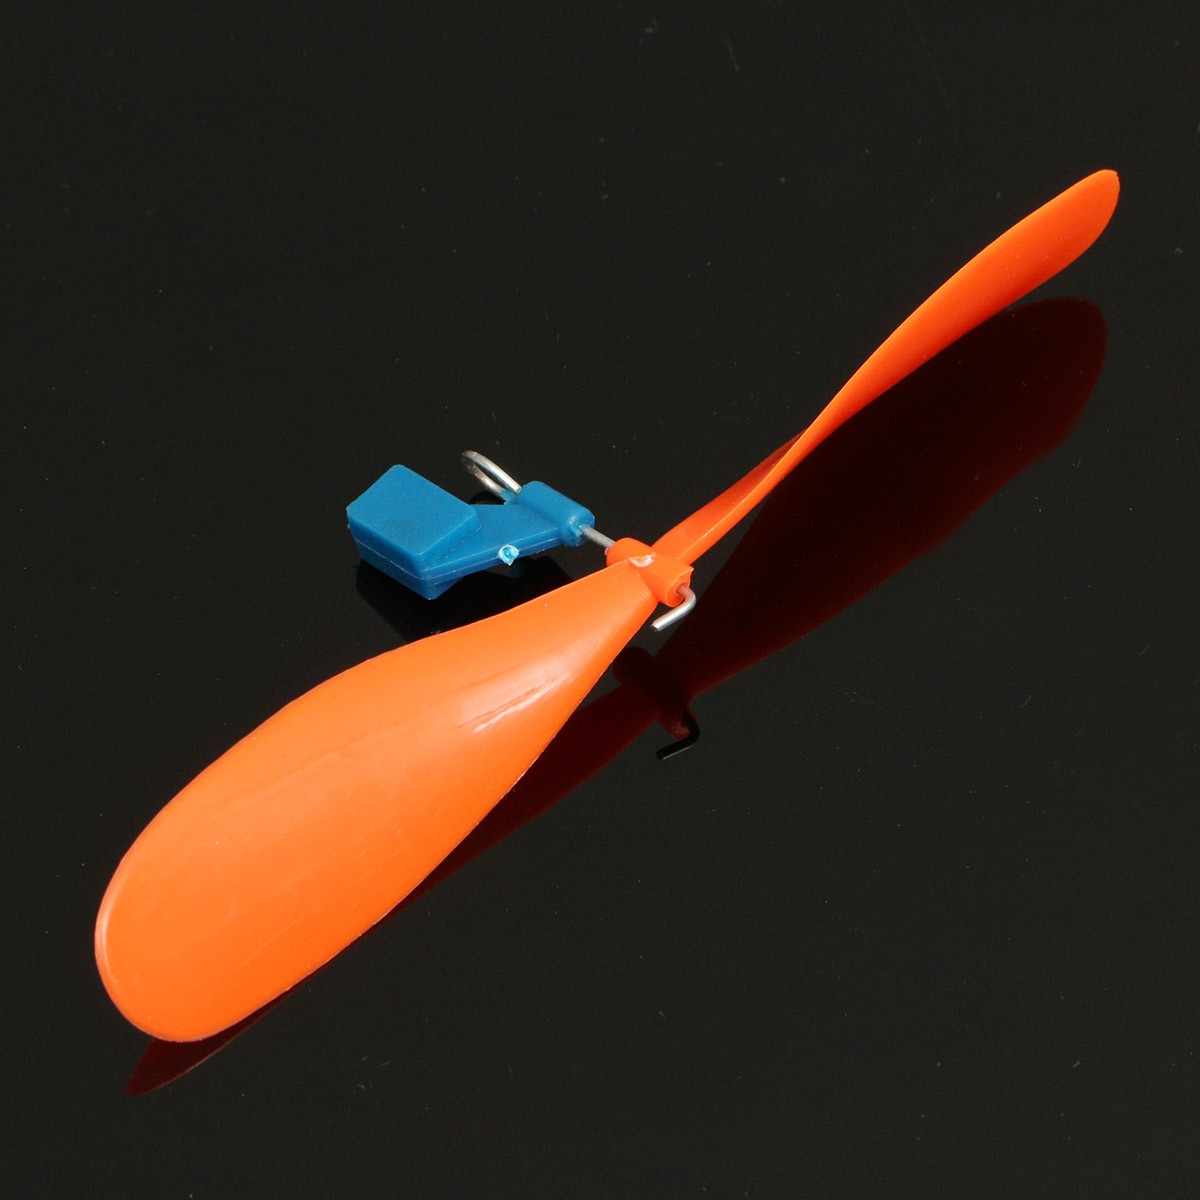 Elastic-Rubber-Band-Powered-DIY-Foam-Plane-Kit-Aircraft-Model-Educational-Toy-1120805-5